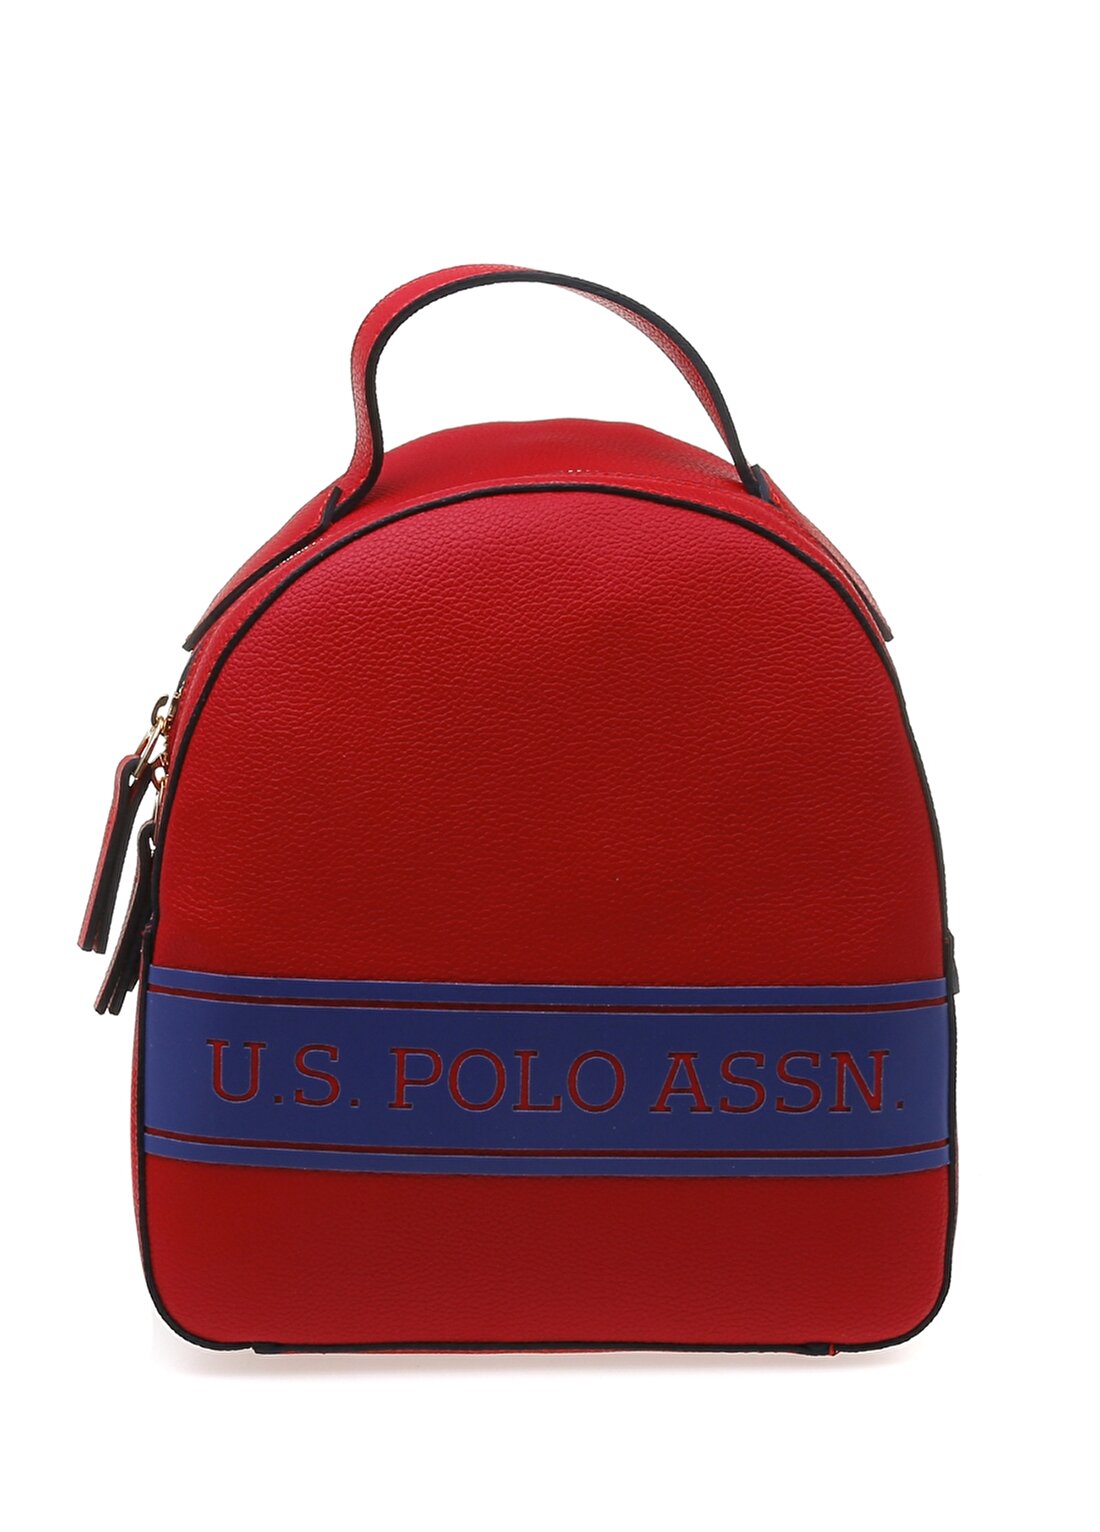 U.S. Polo Assn. Kırmızı Sırt Çantası